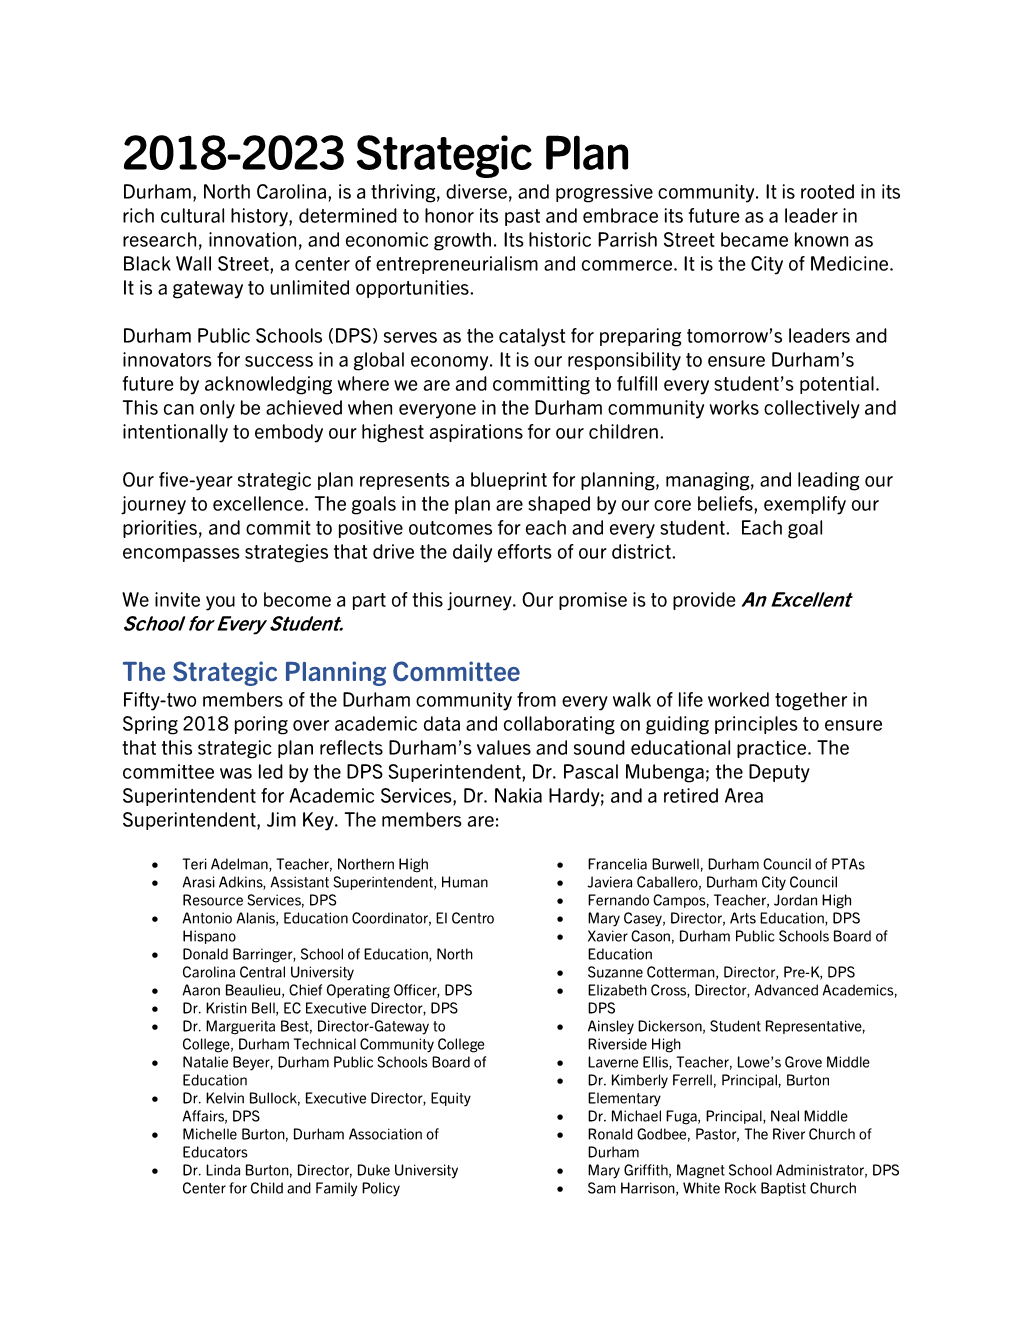 2018-2023 Strategic Plan Durham, North Carolina, Is a Thriving, Diverse, and Progressive Community